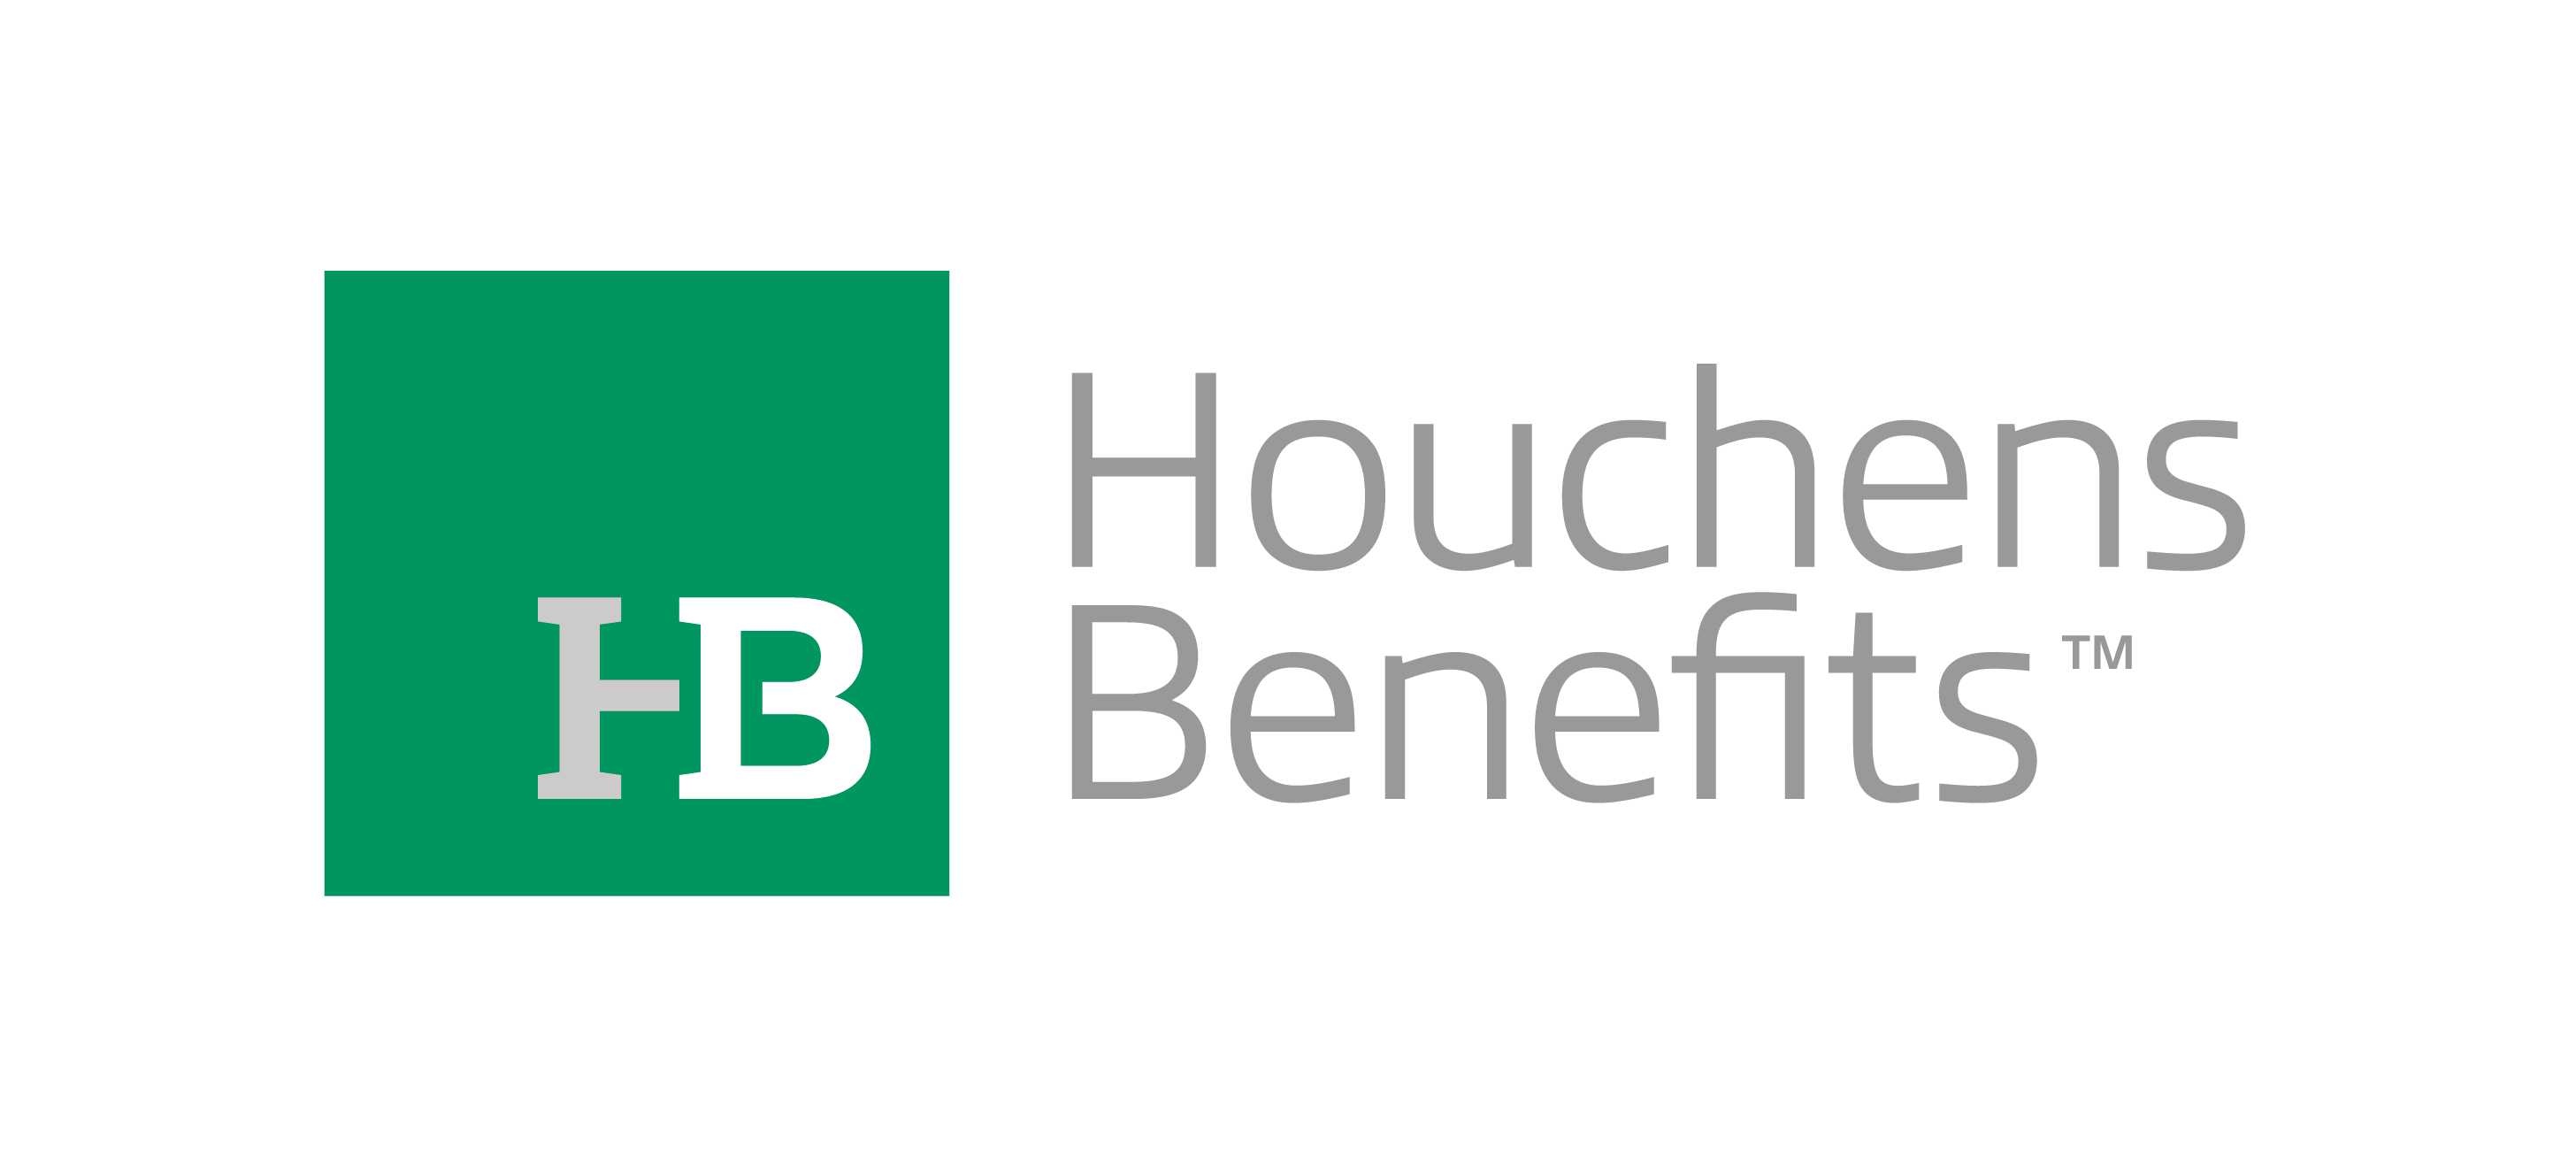 houchens benefits logo